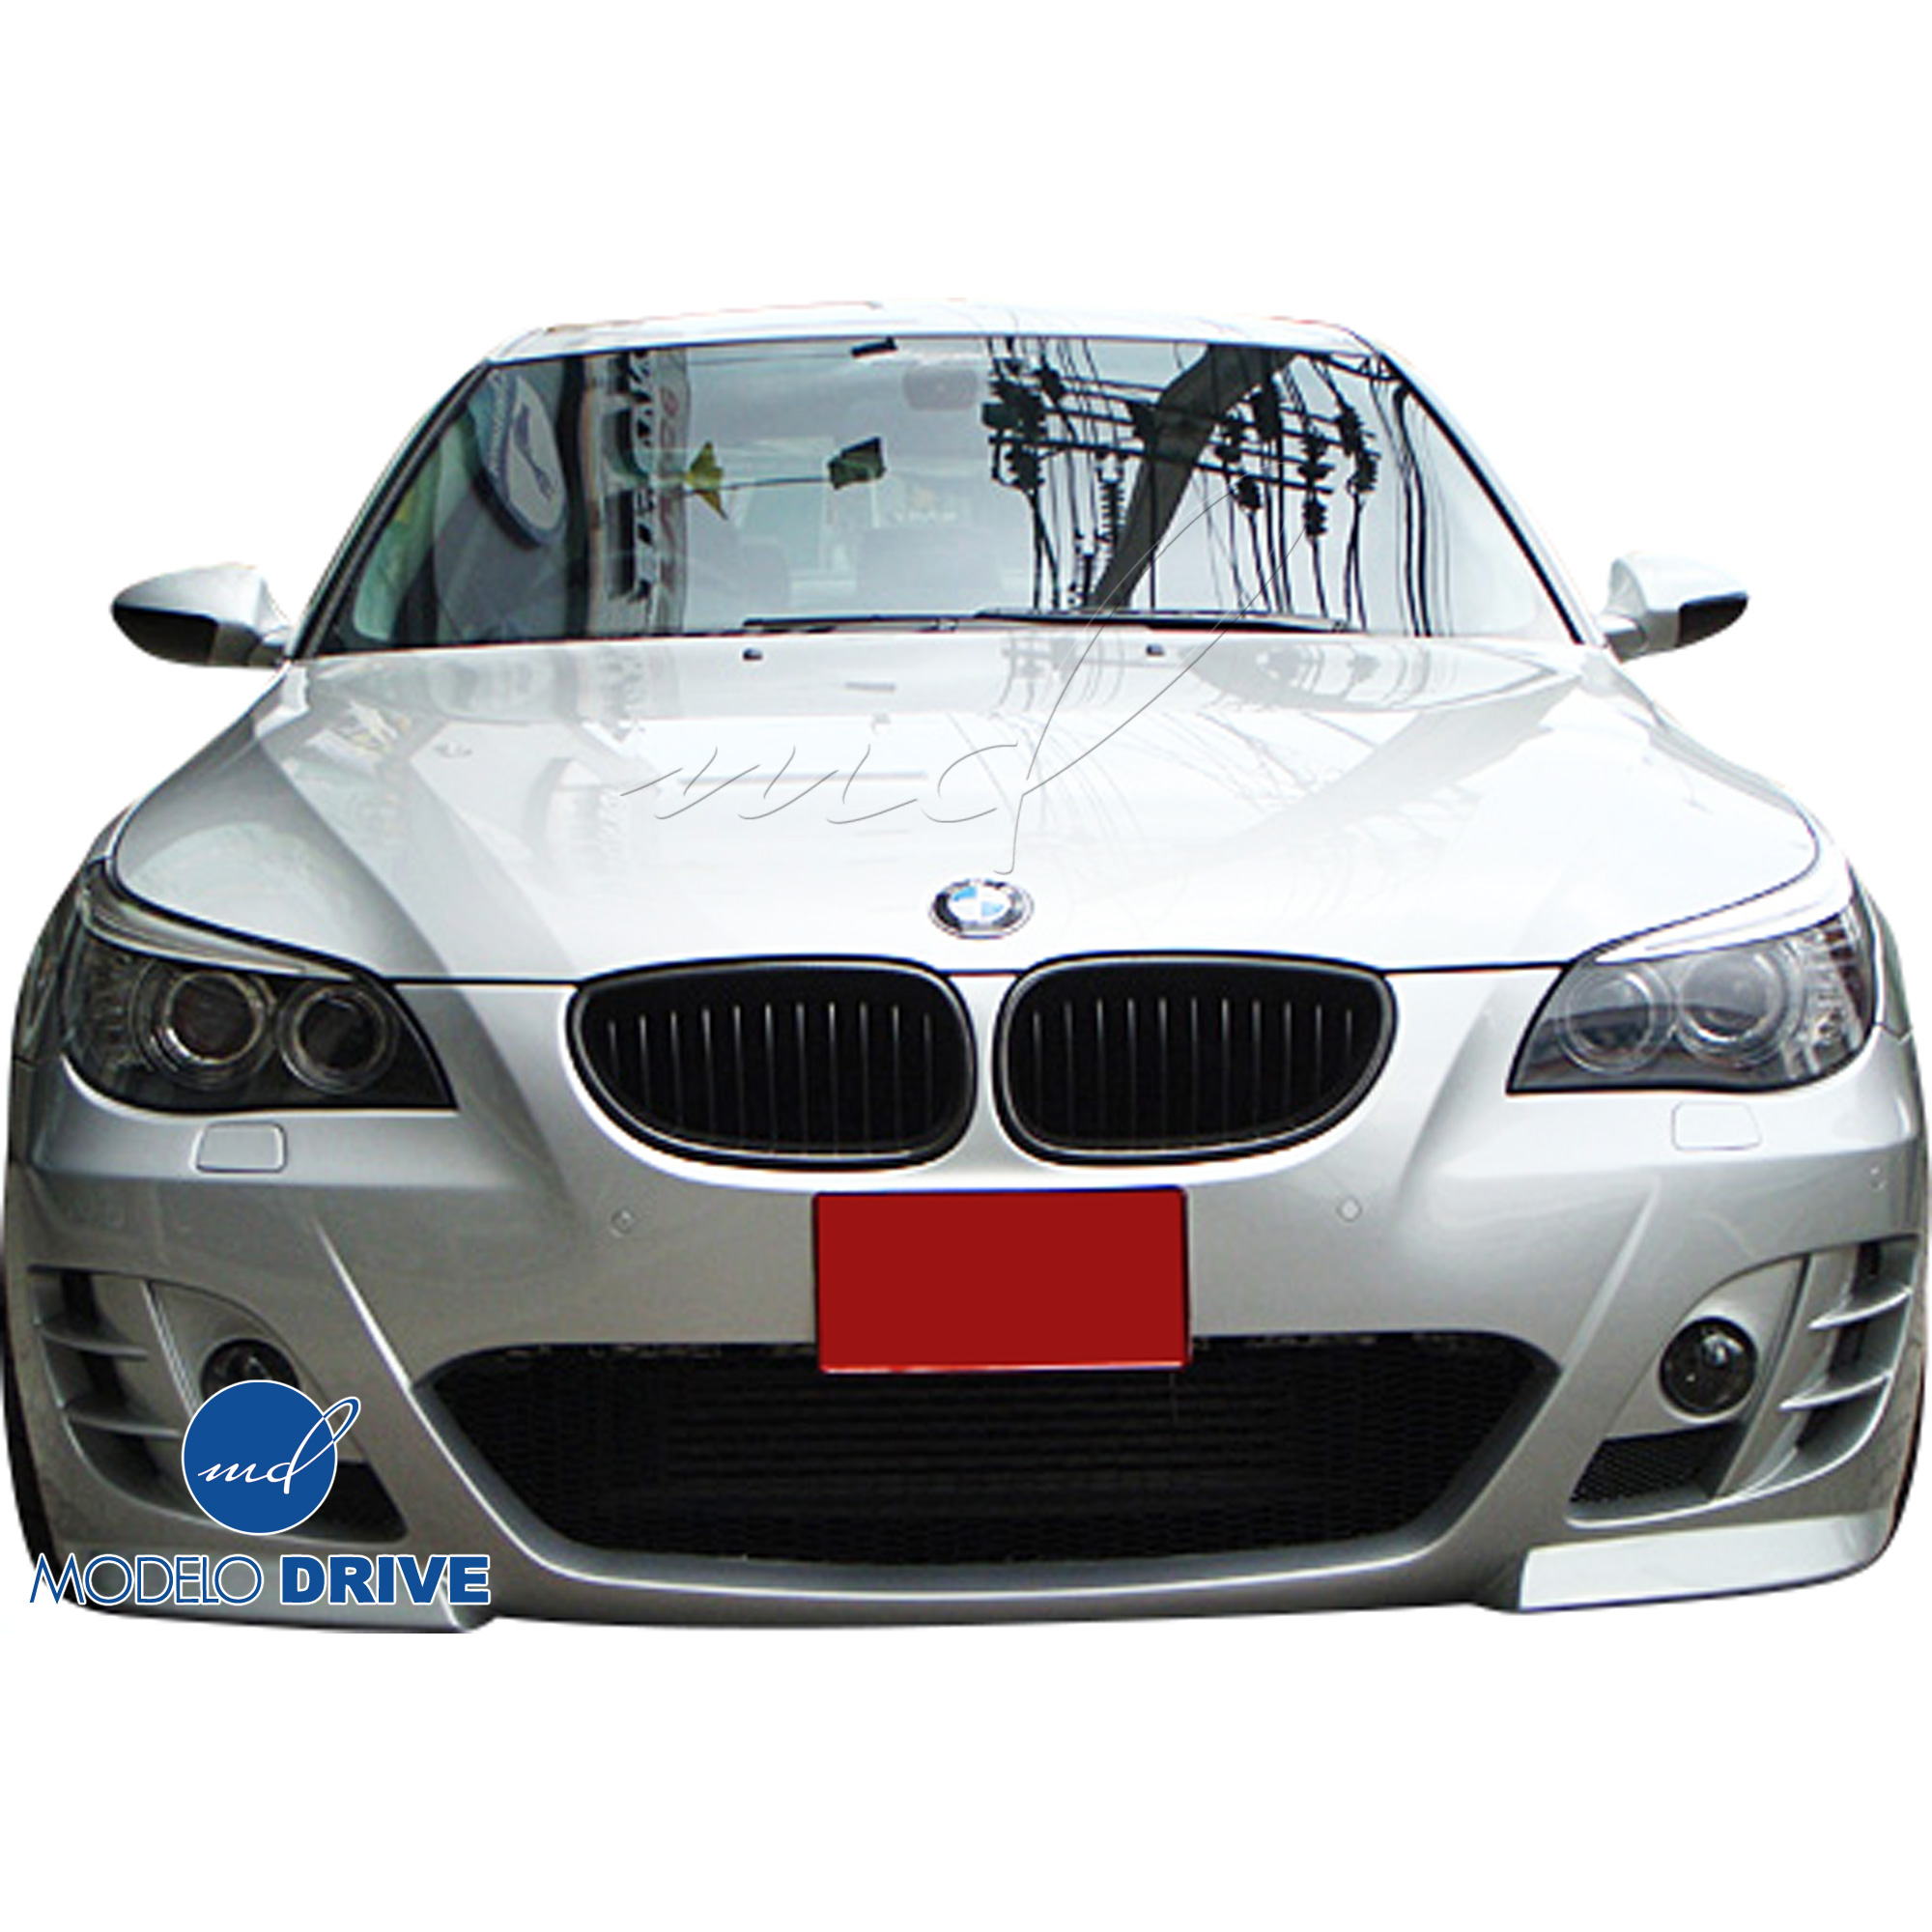 ModeloDrive FRP KERS Front Bumper > BMW 5-Series E60 2004-2010 > 4dr - Image 13